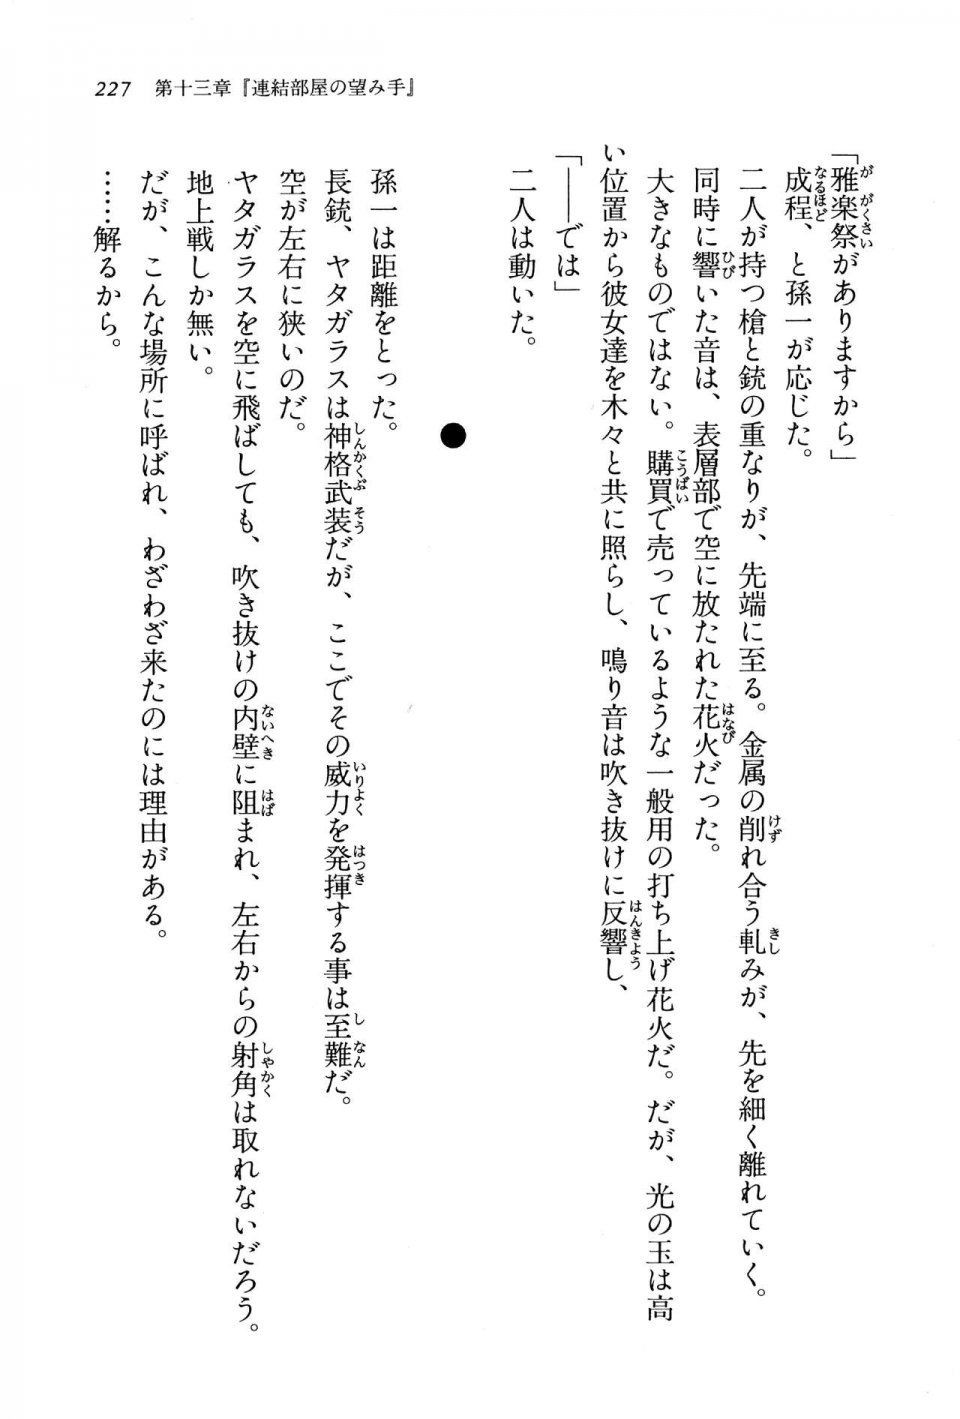 Kyoukai Senjou no Horizon BD Special Mininovel Vol 8(4B) - Photo #231